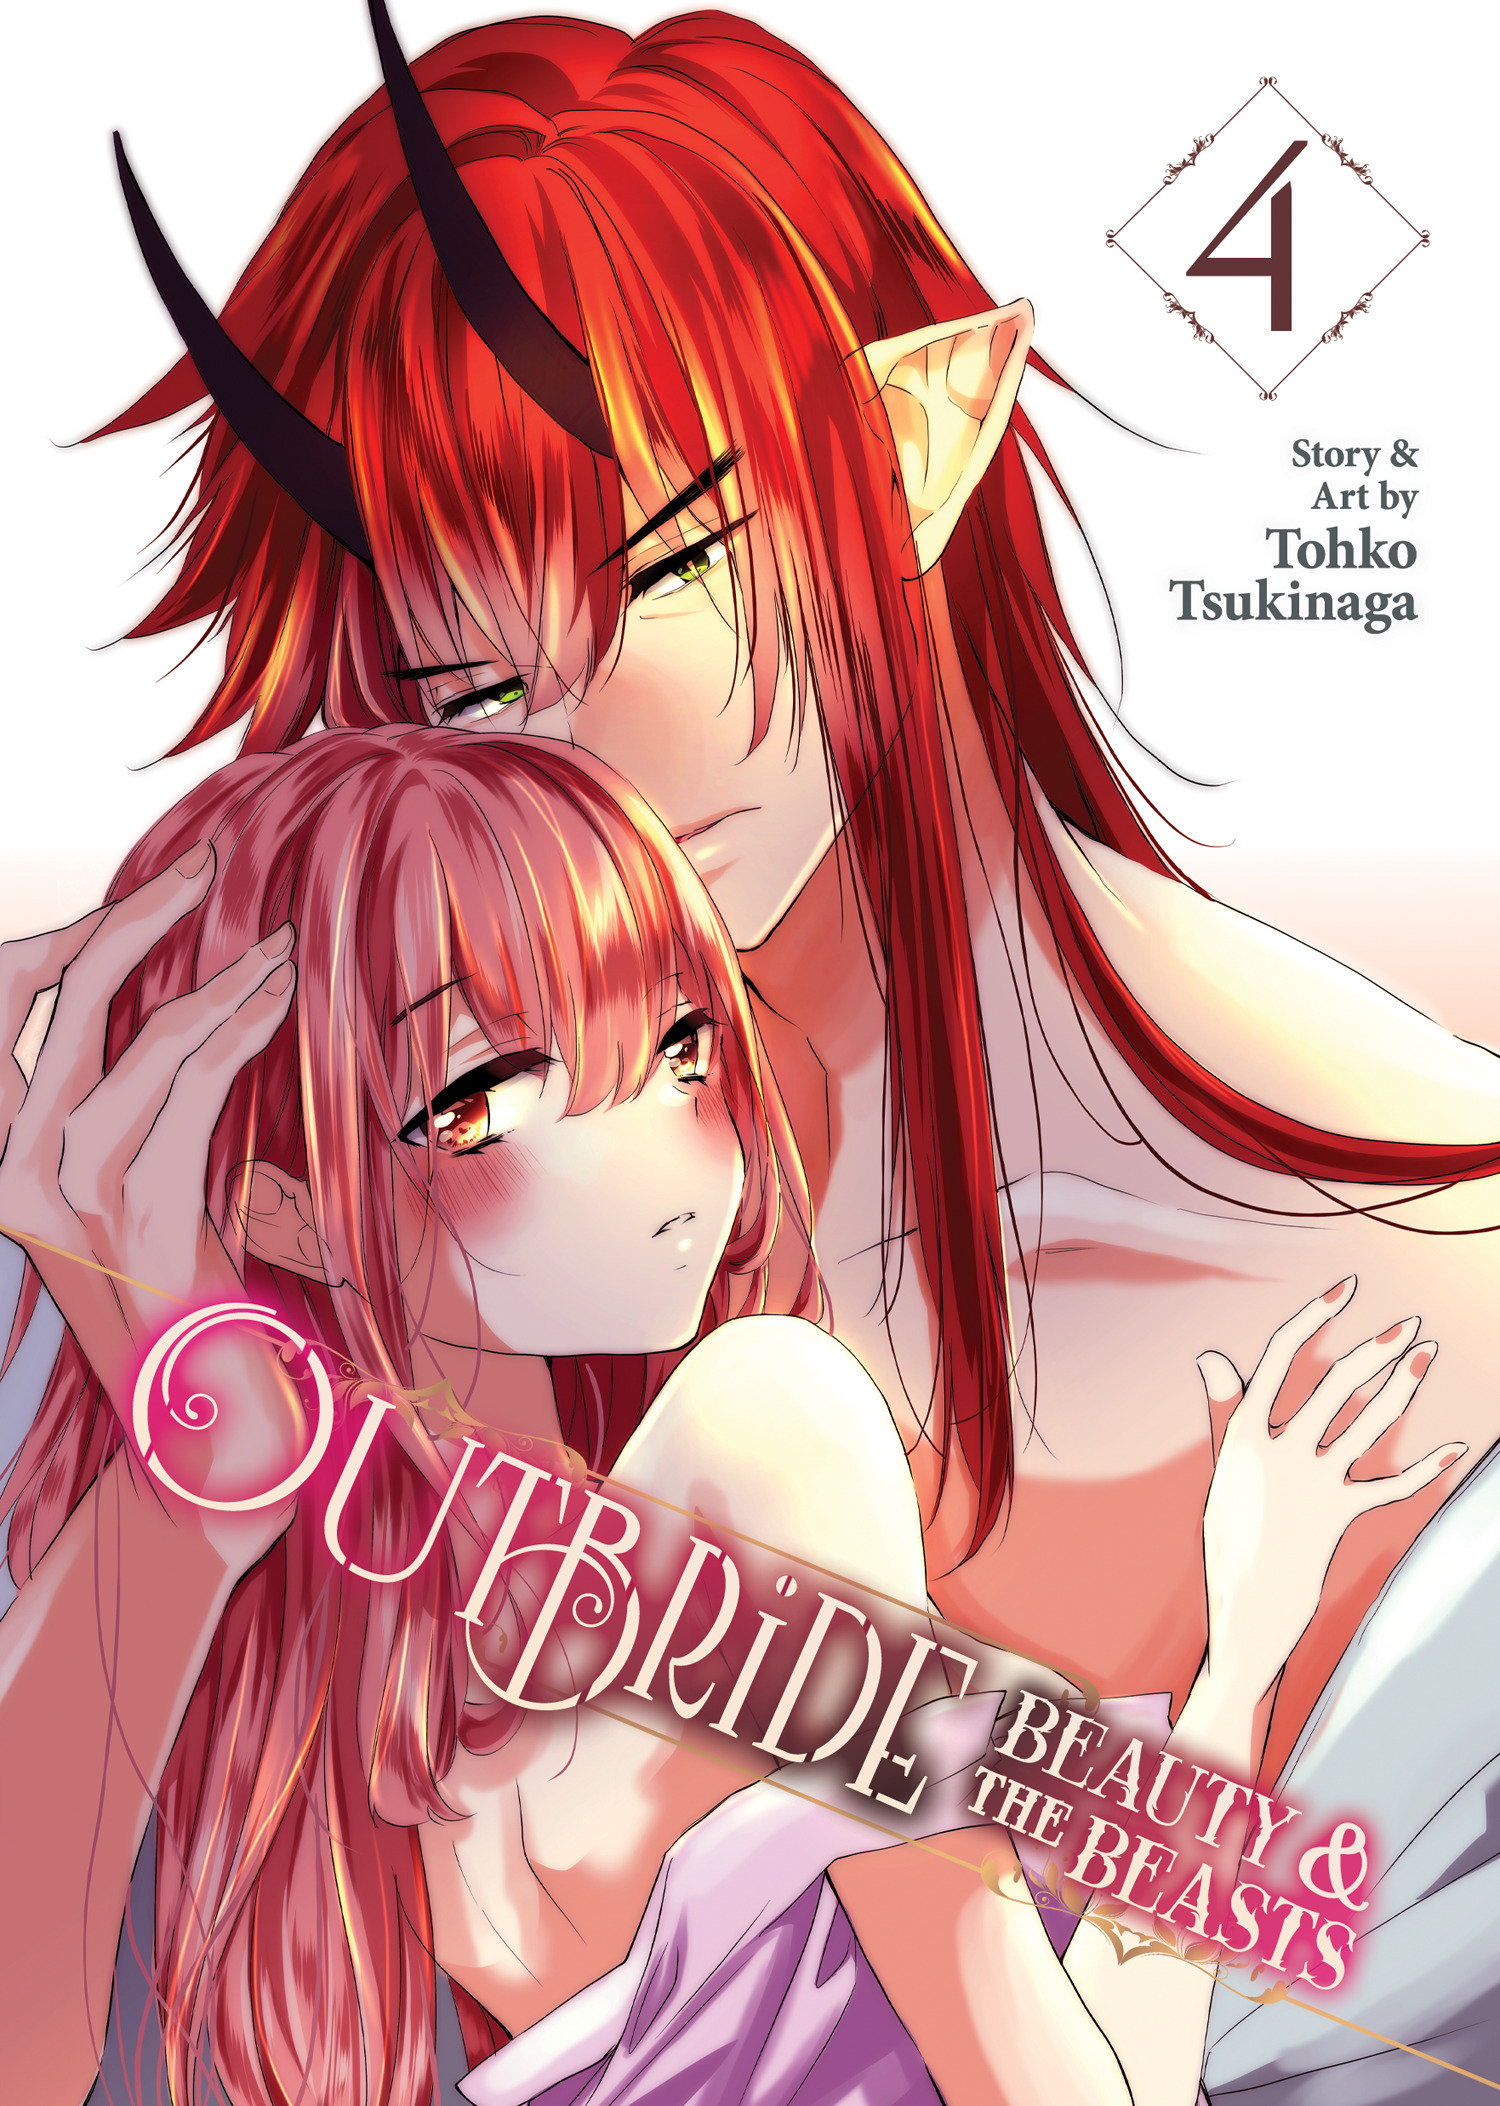 Outbride Beauty & Beasts Manga Volume 4